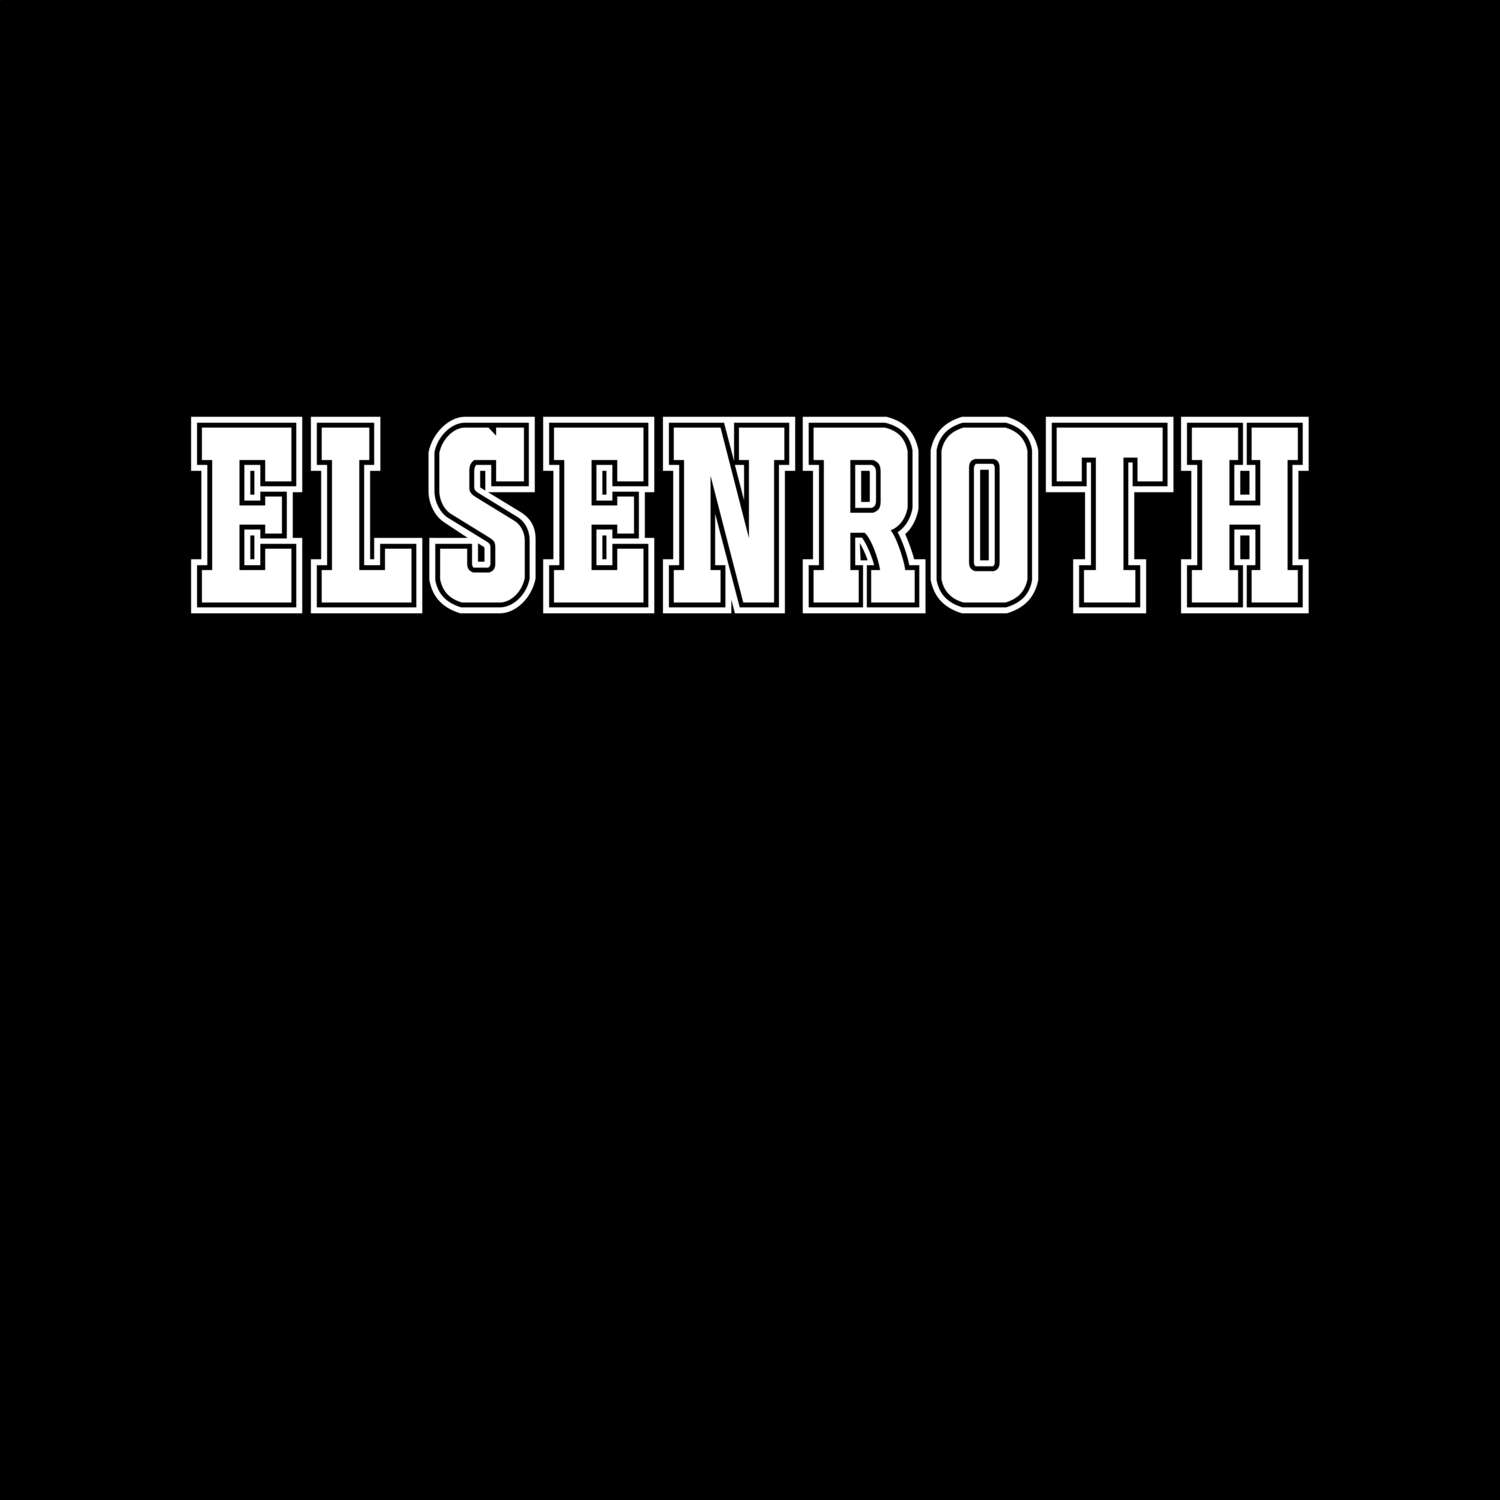 Elsenroth T-Shirt »Classic«